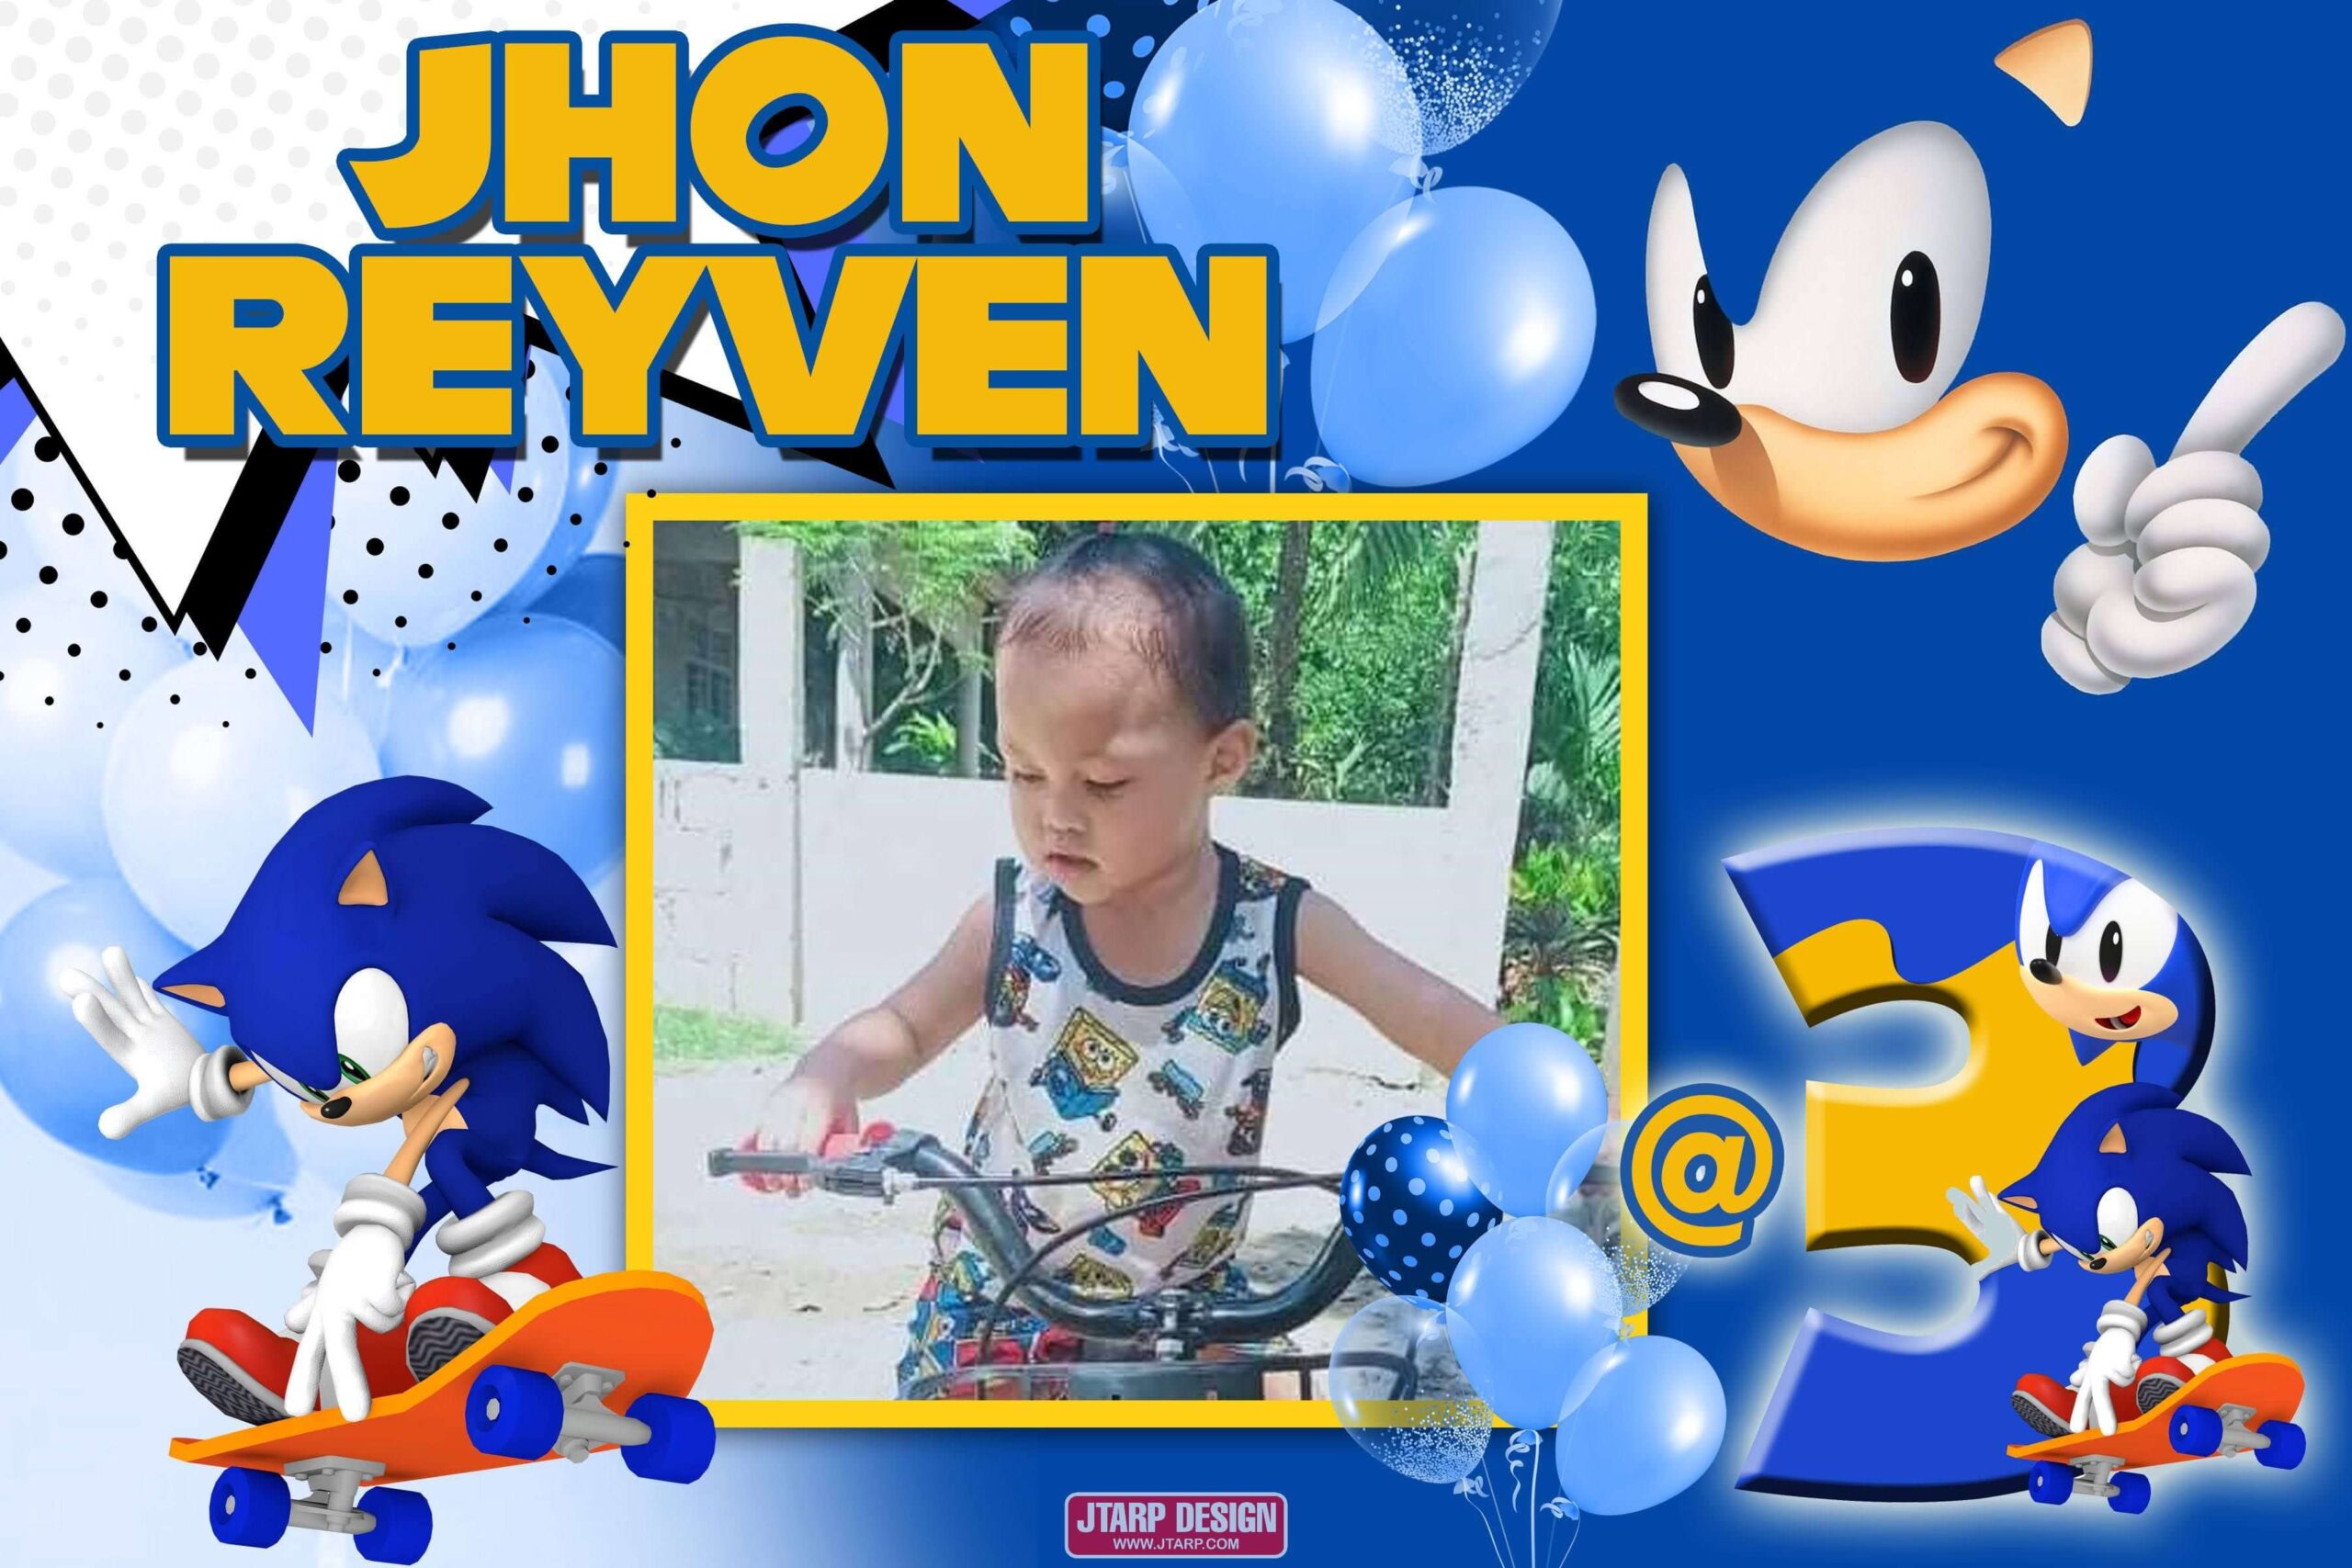 3x2 Jhon Reyven @3 Sonic the Hedgehog Theme